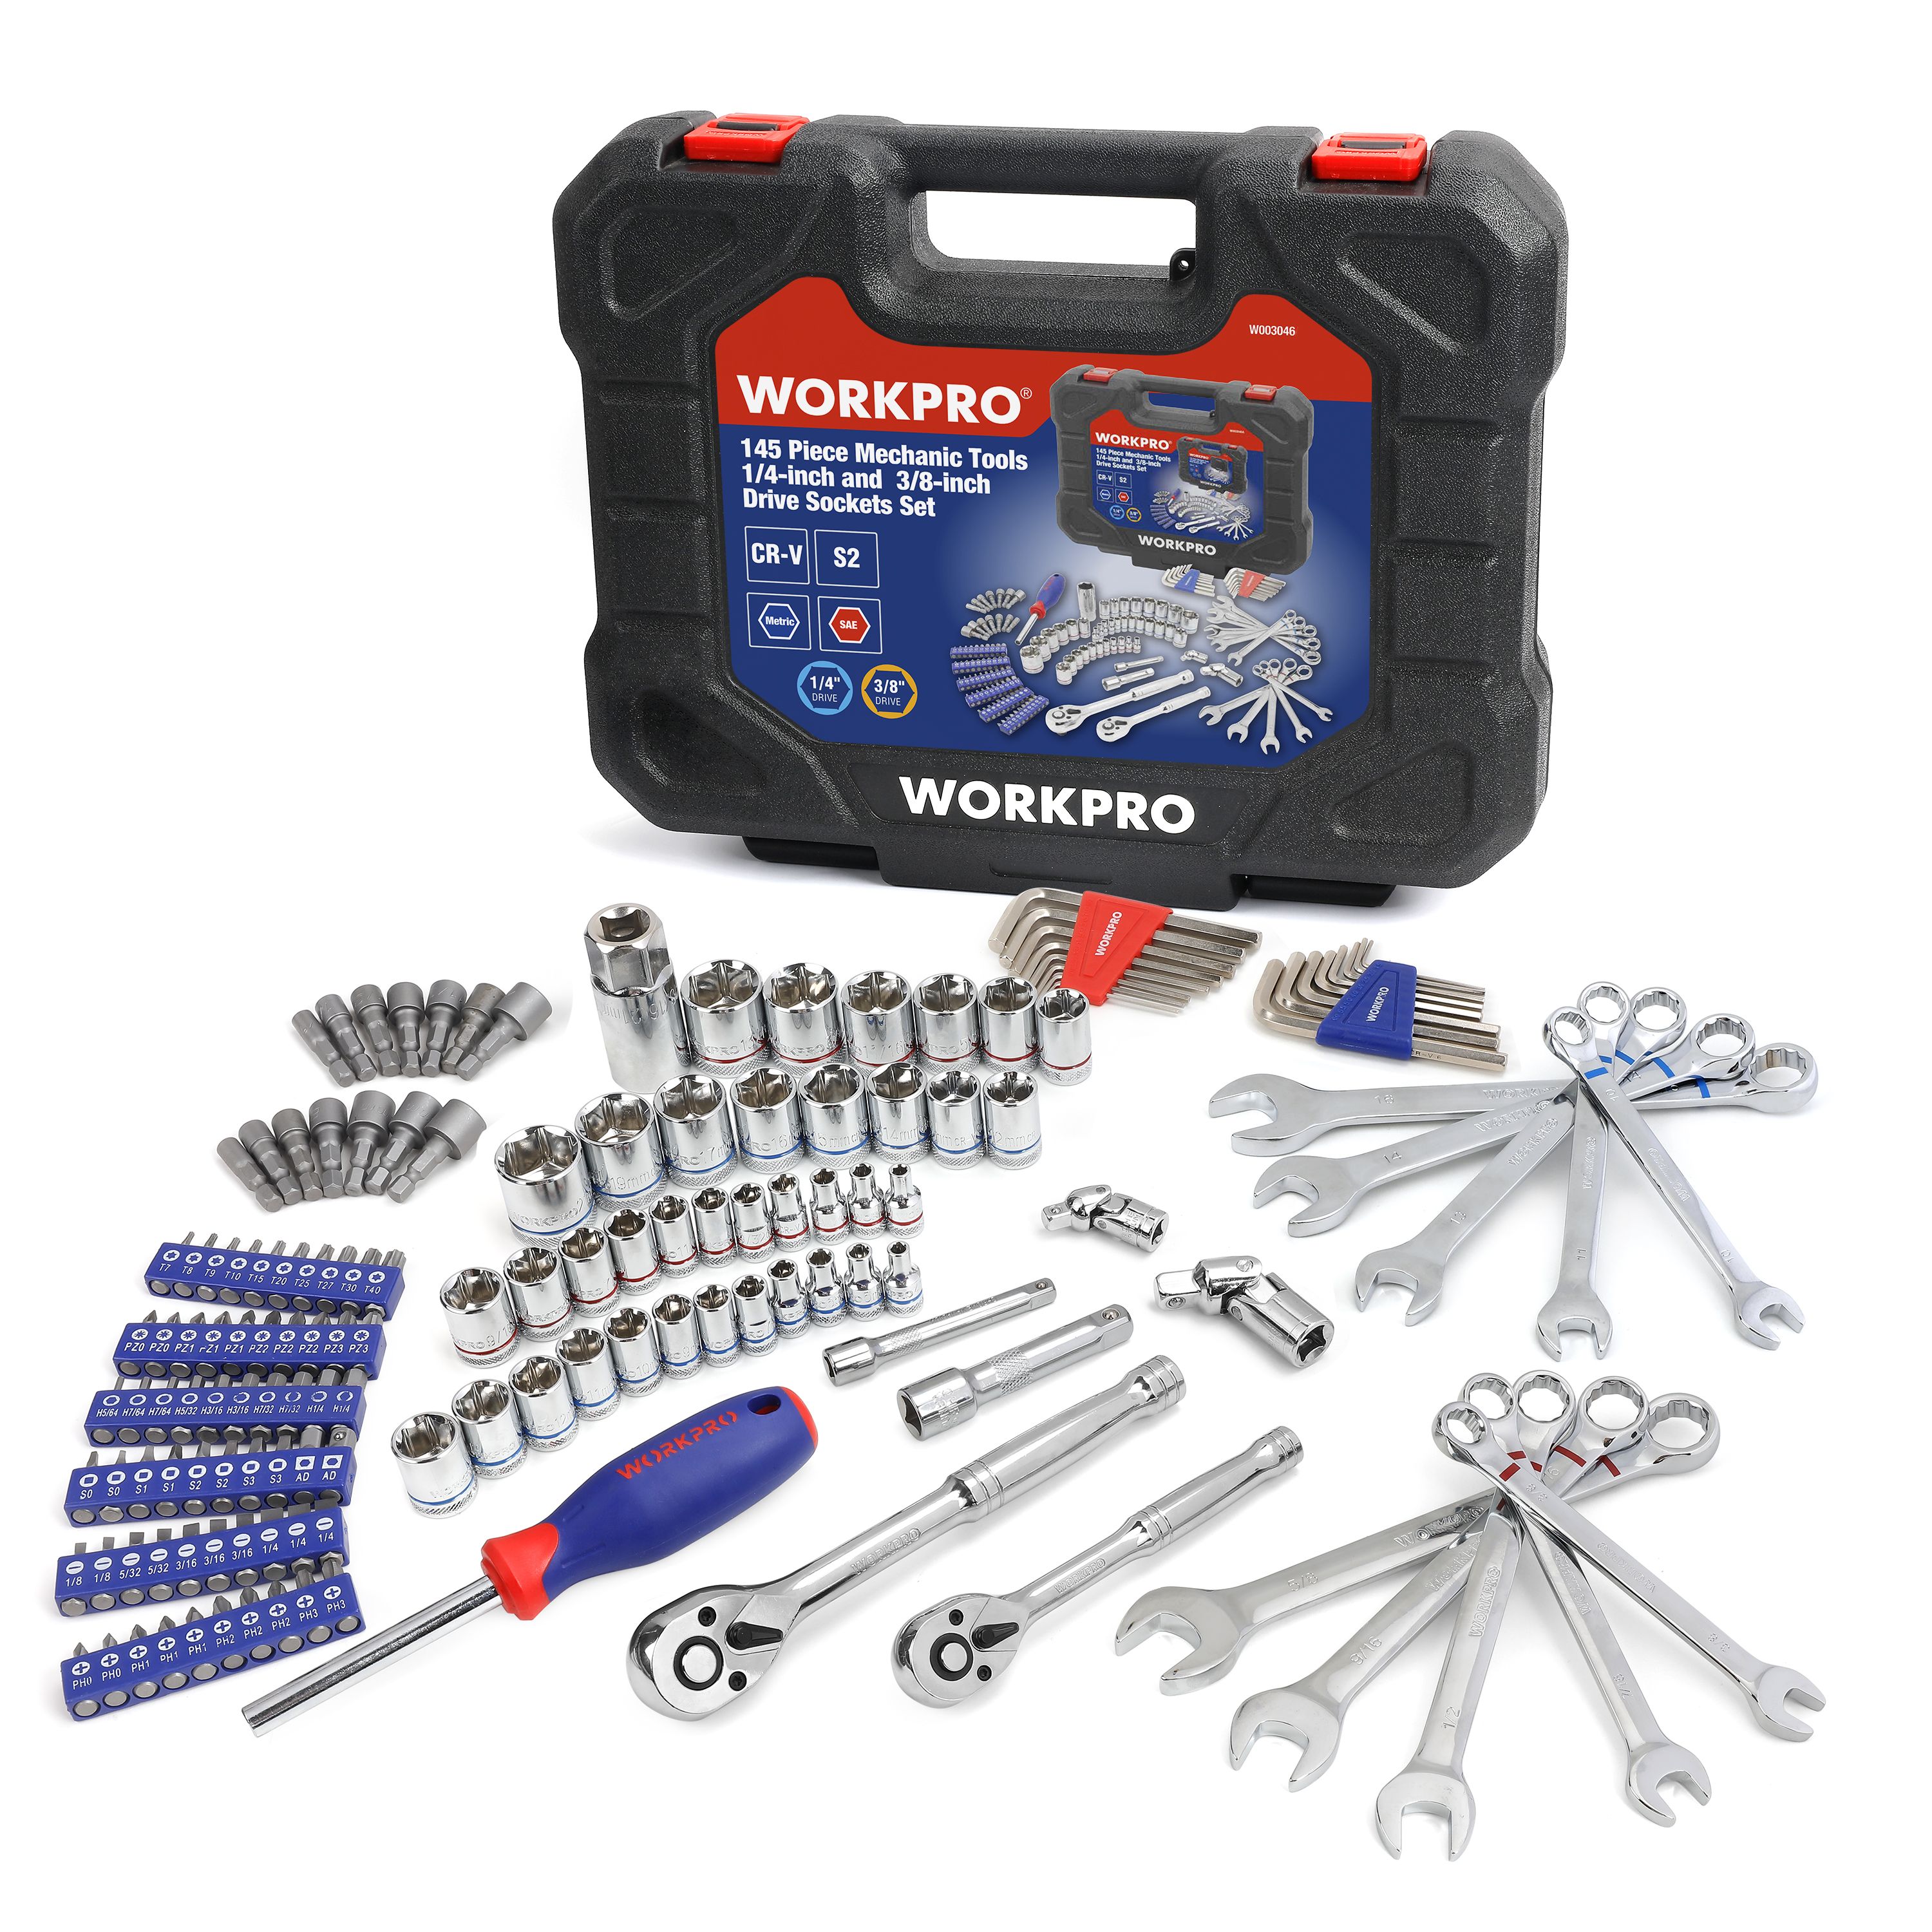 Workpro Mechanic’s Tool Set